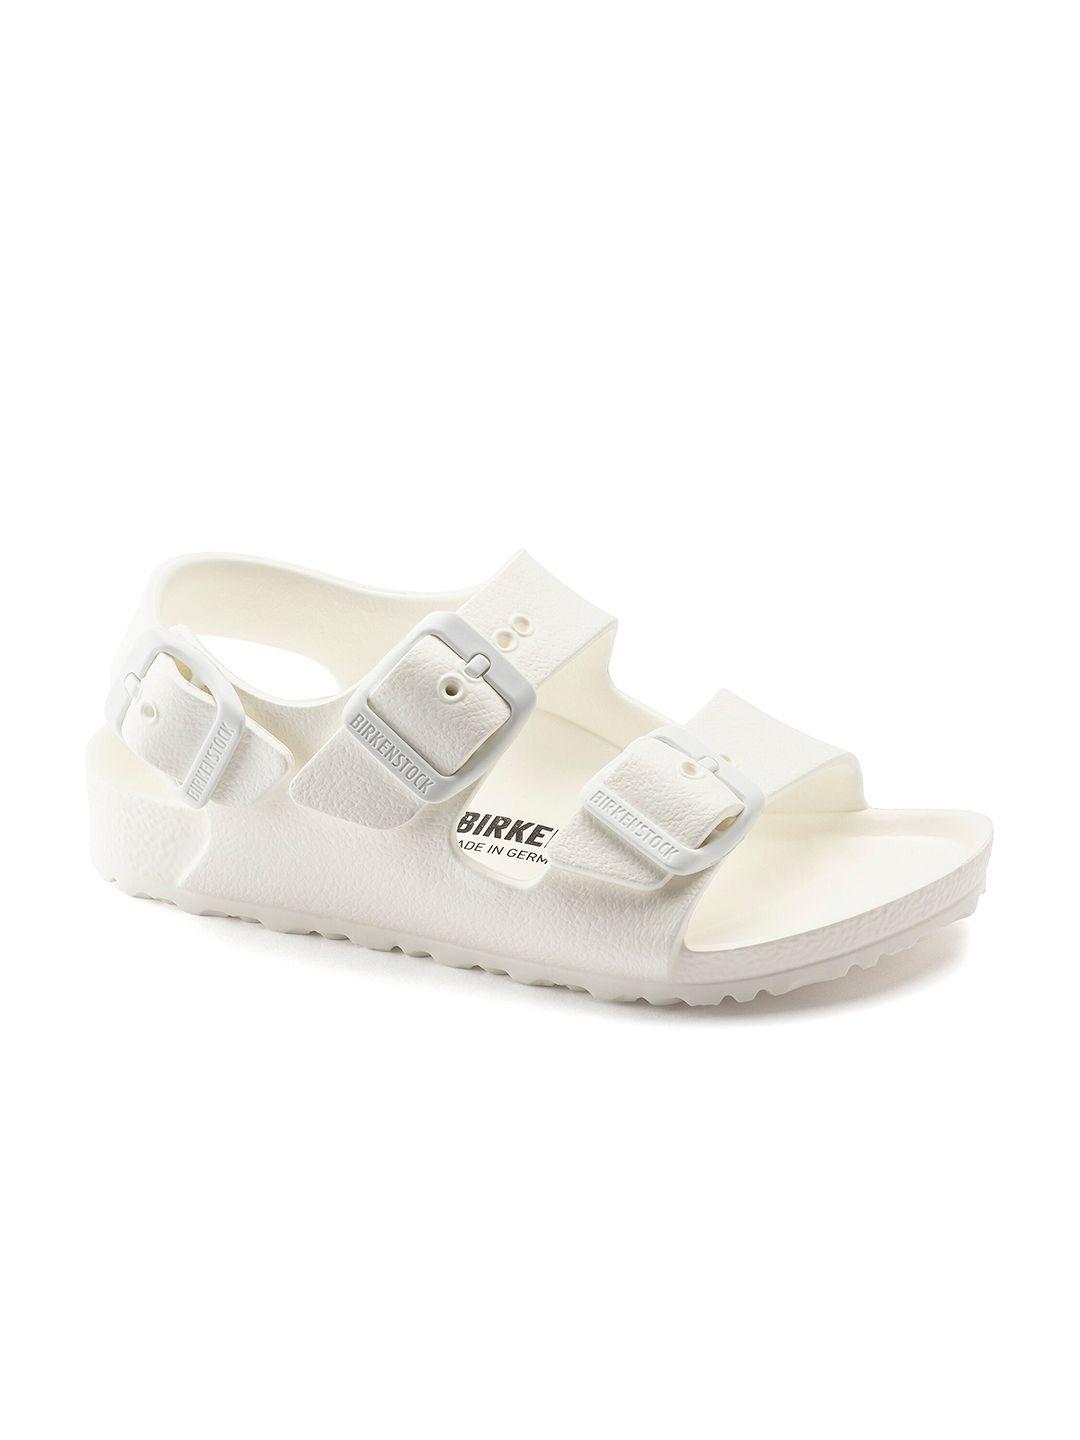 birkenstock milano boys narrow width two-strap comfort sandals